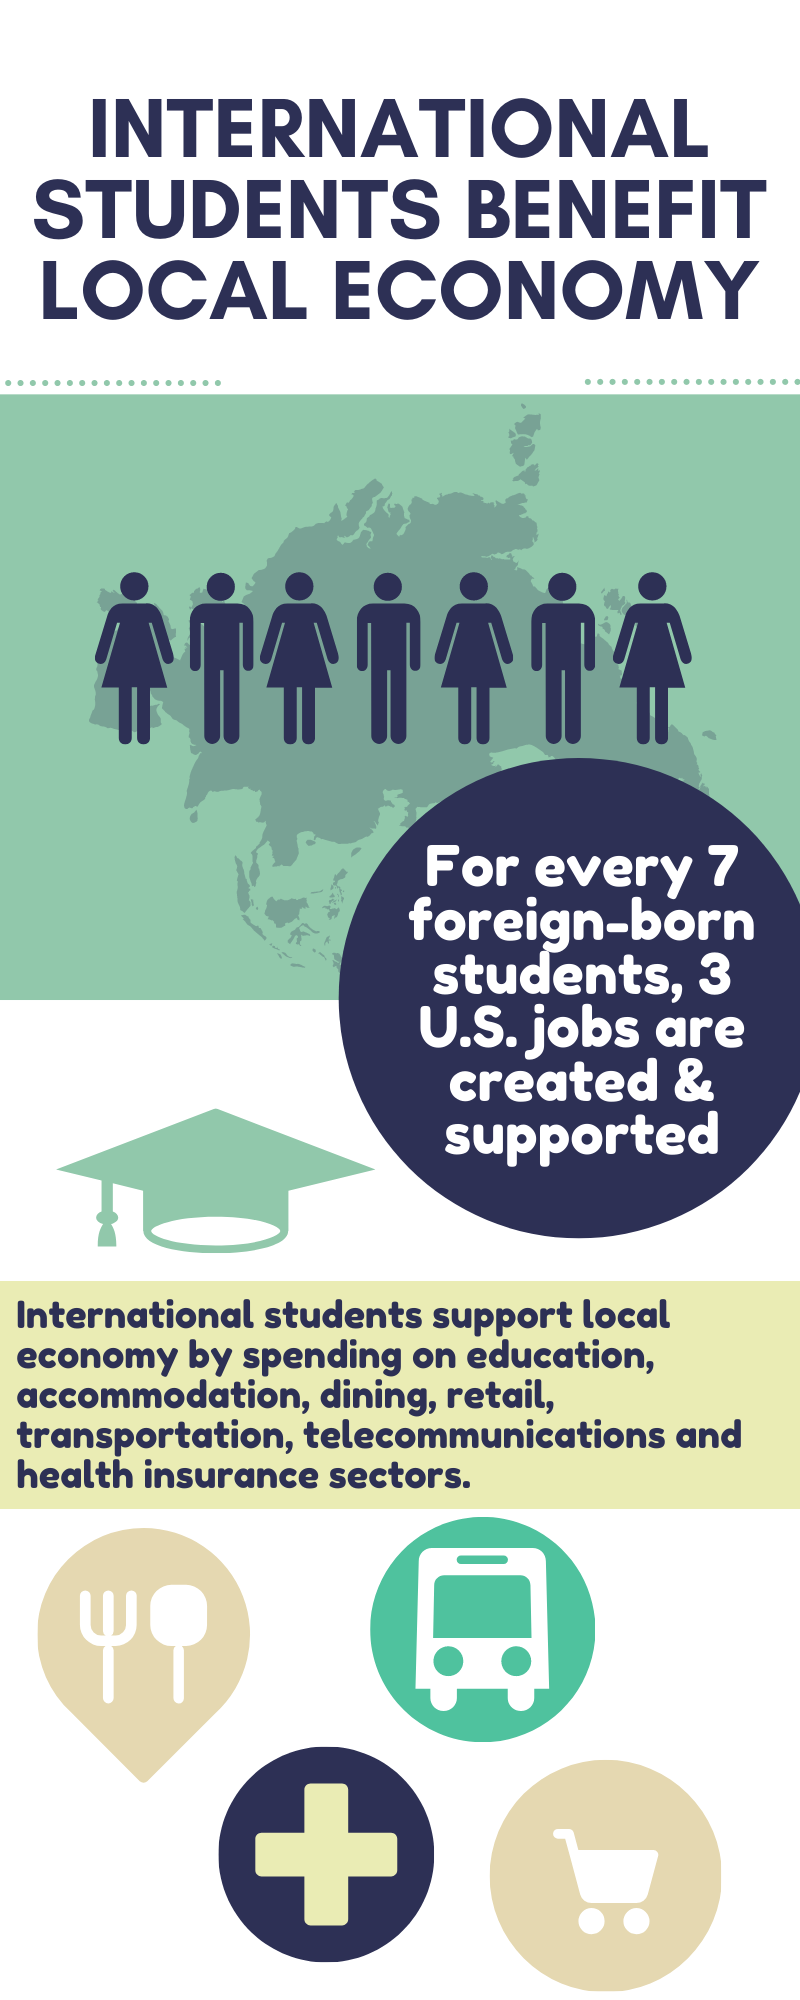 STL Mosaic Project Speaks On International Students